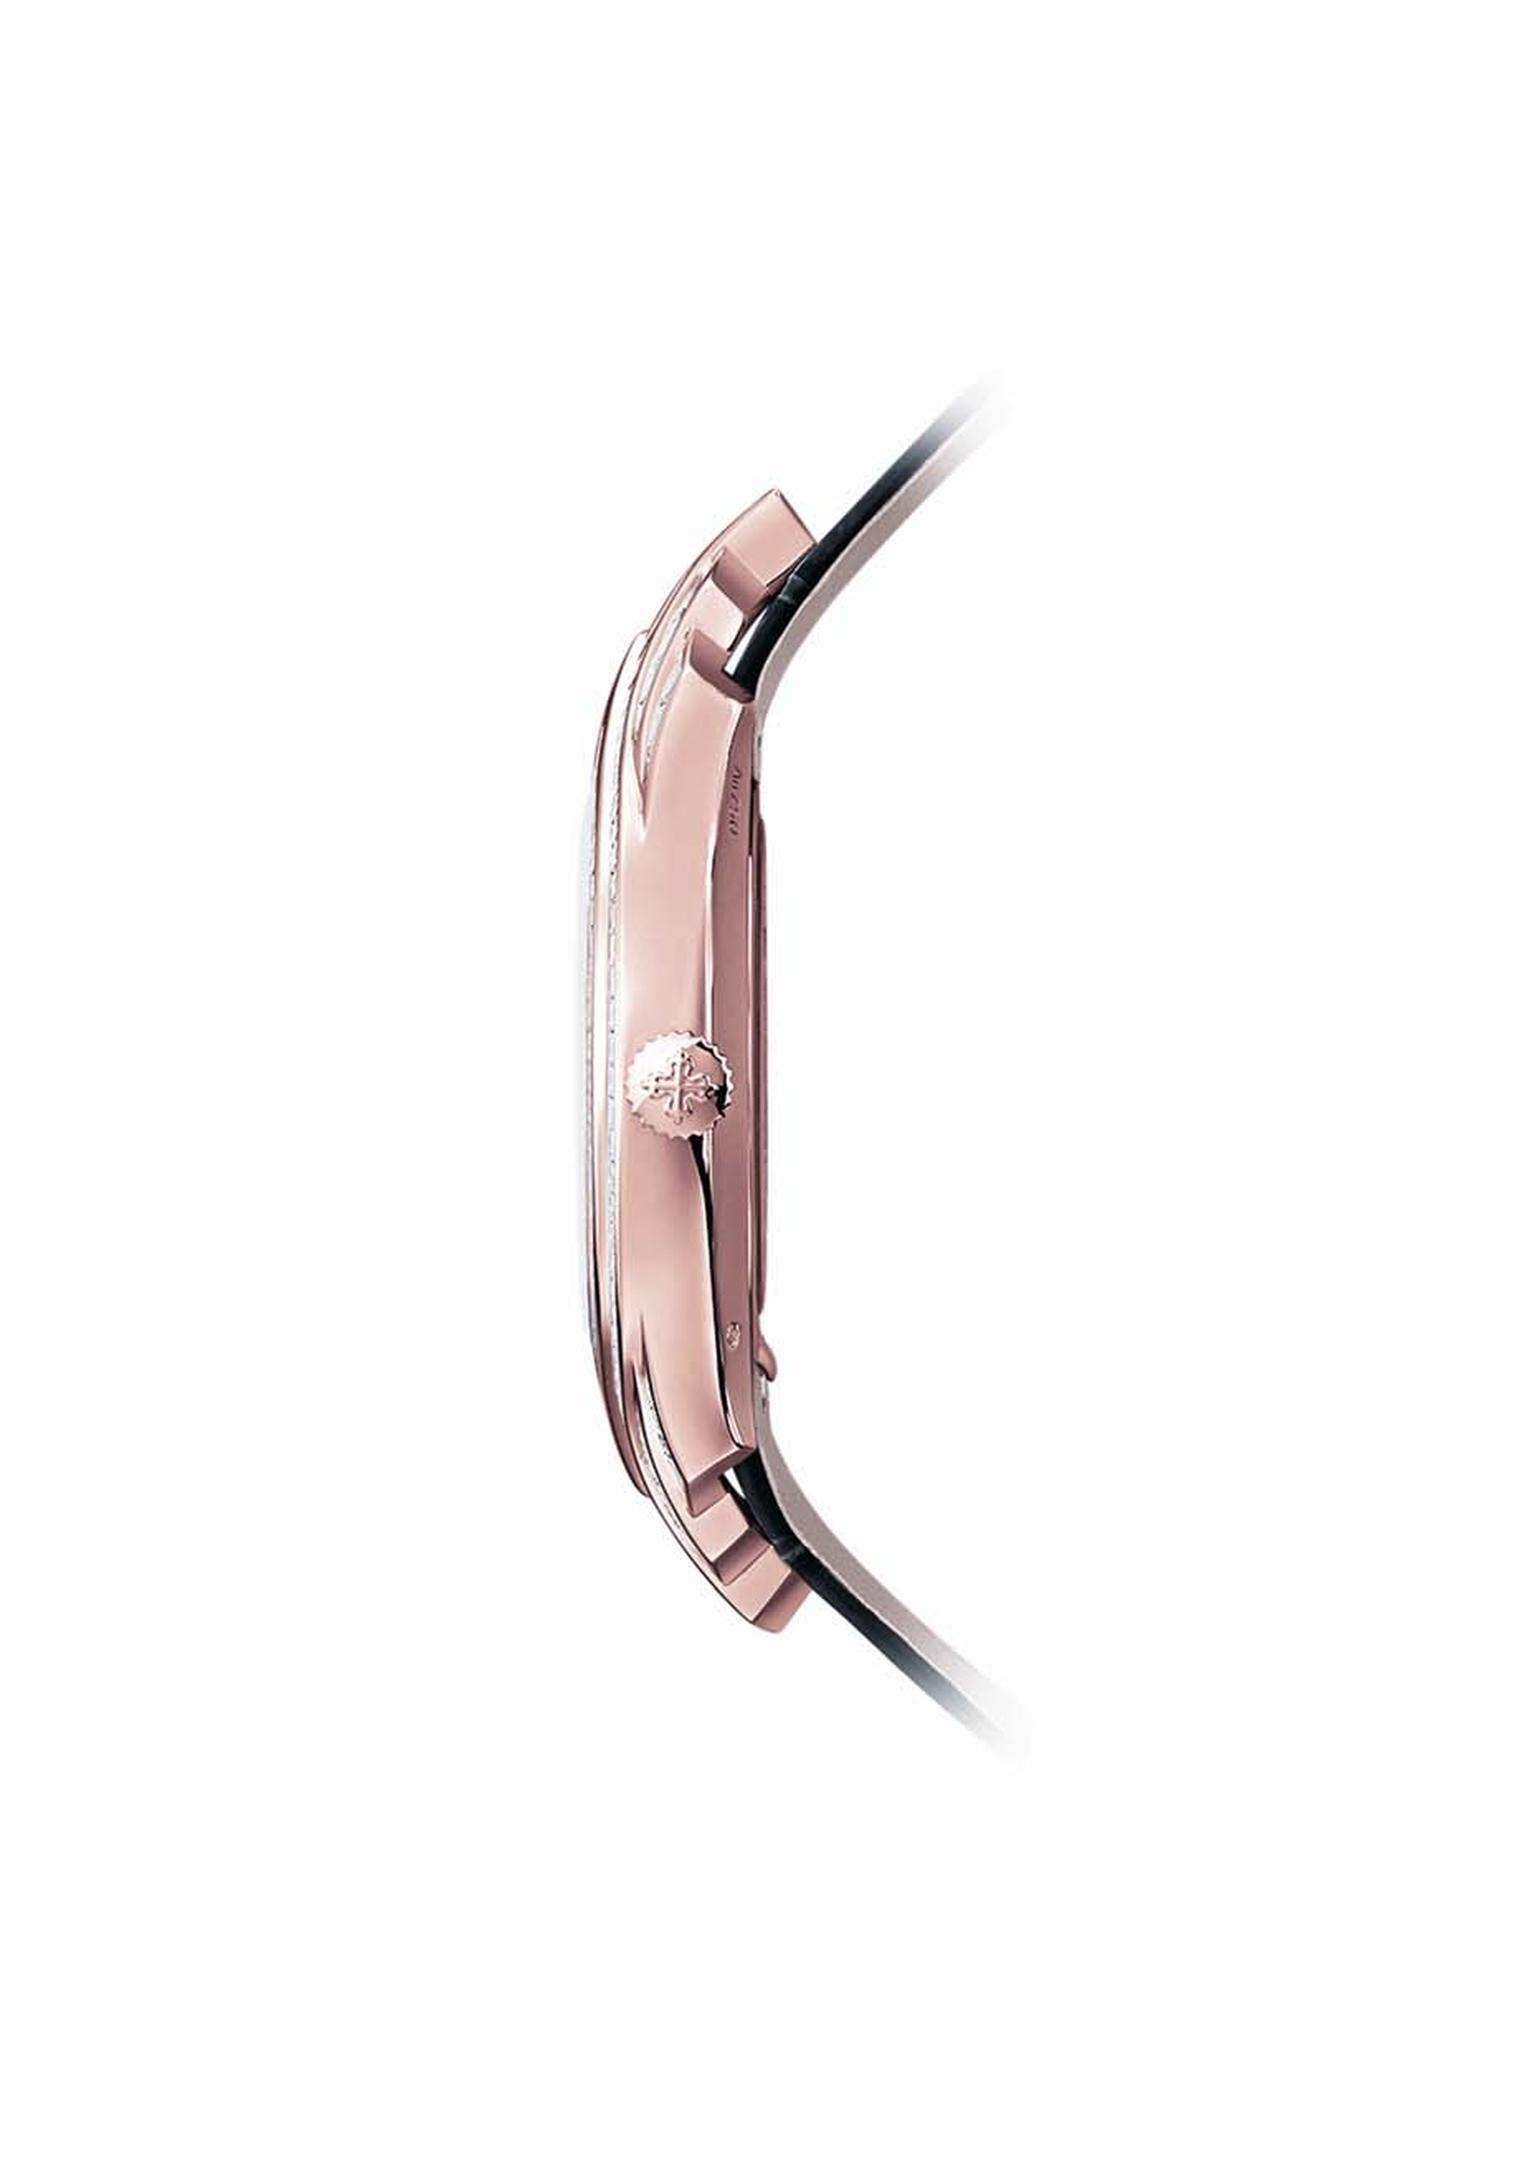 Patek Philippe's Calatrava Haute Joaillere Ref. 4895R features a swath of baguette diamonds set in a surrounding rose gold bezel.